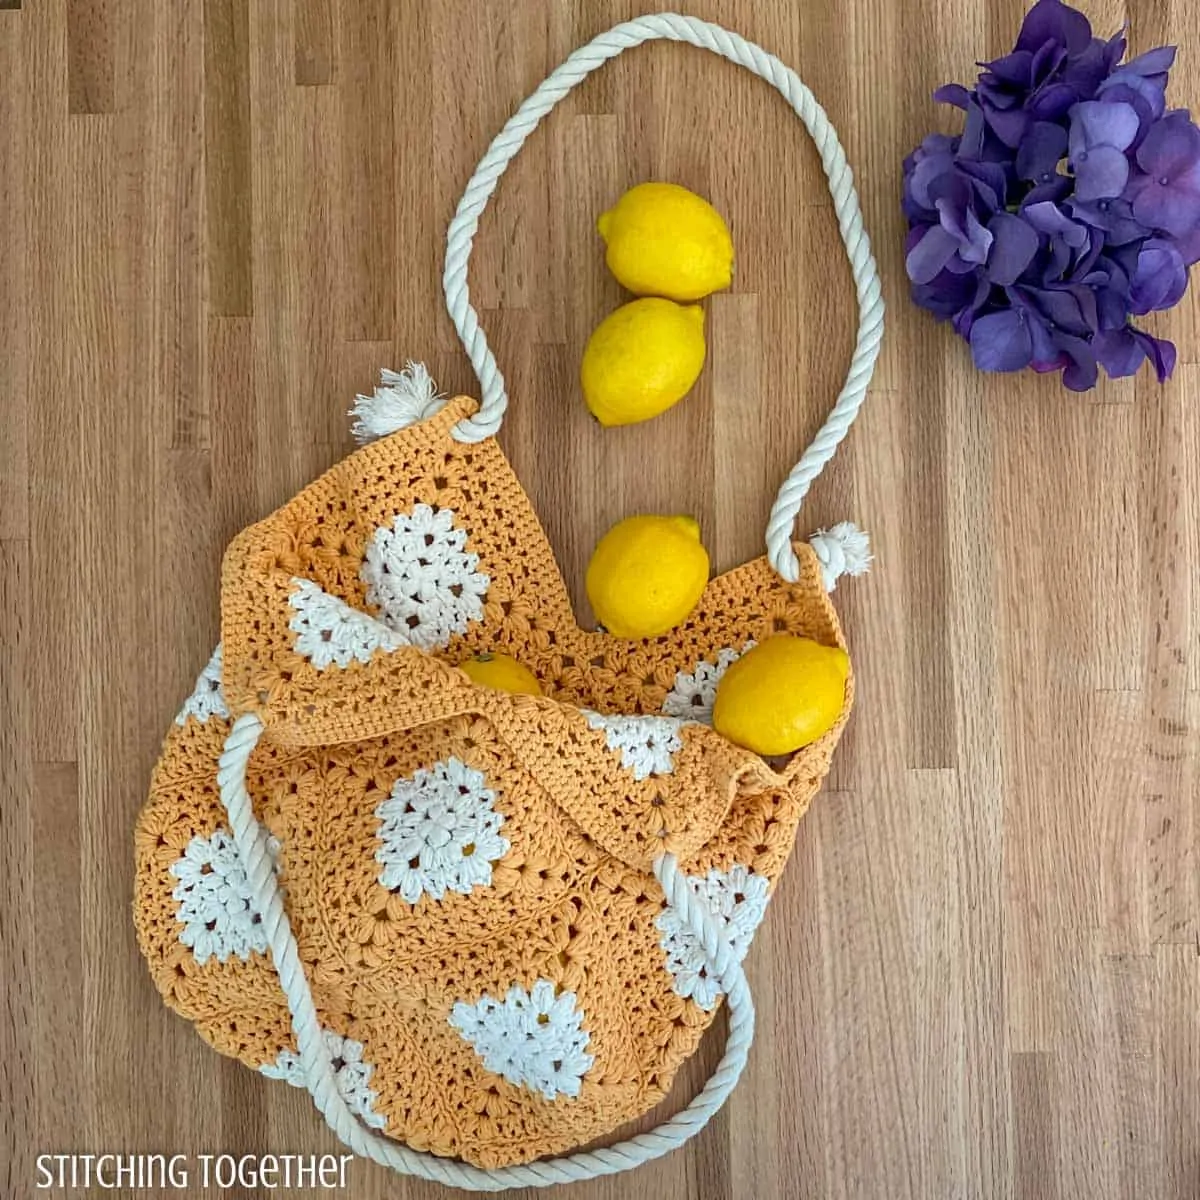 crochet market bag in squares